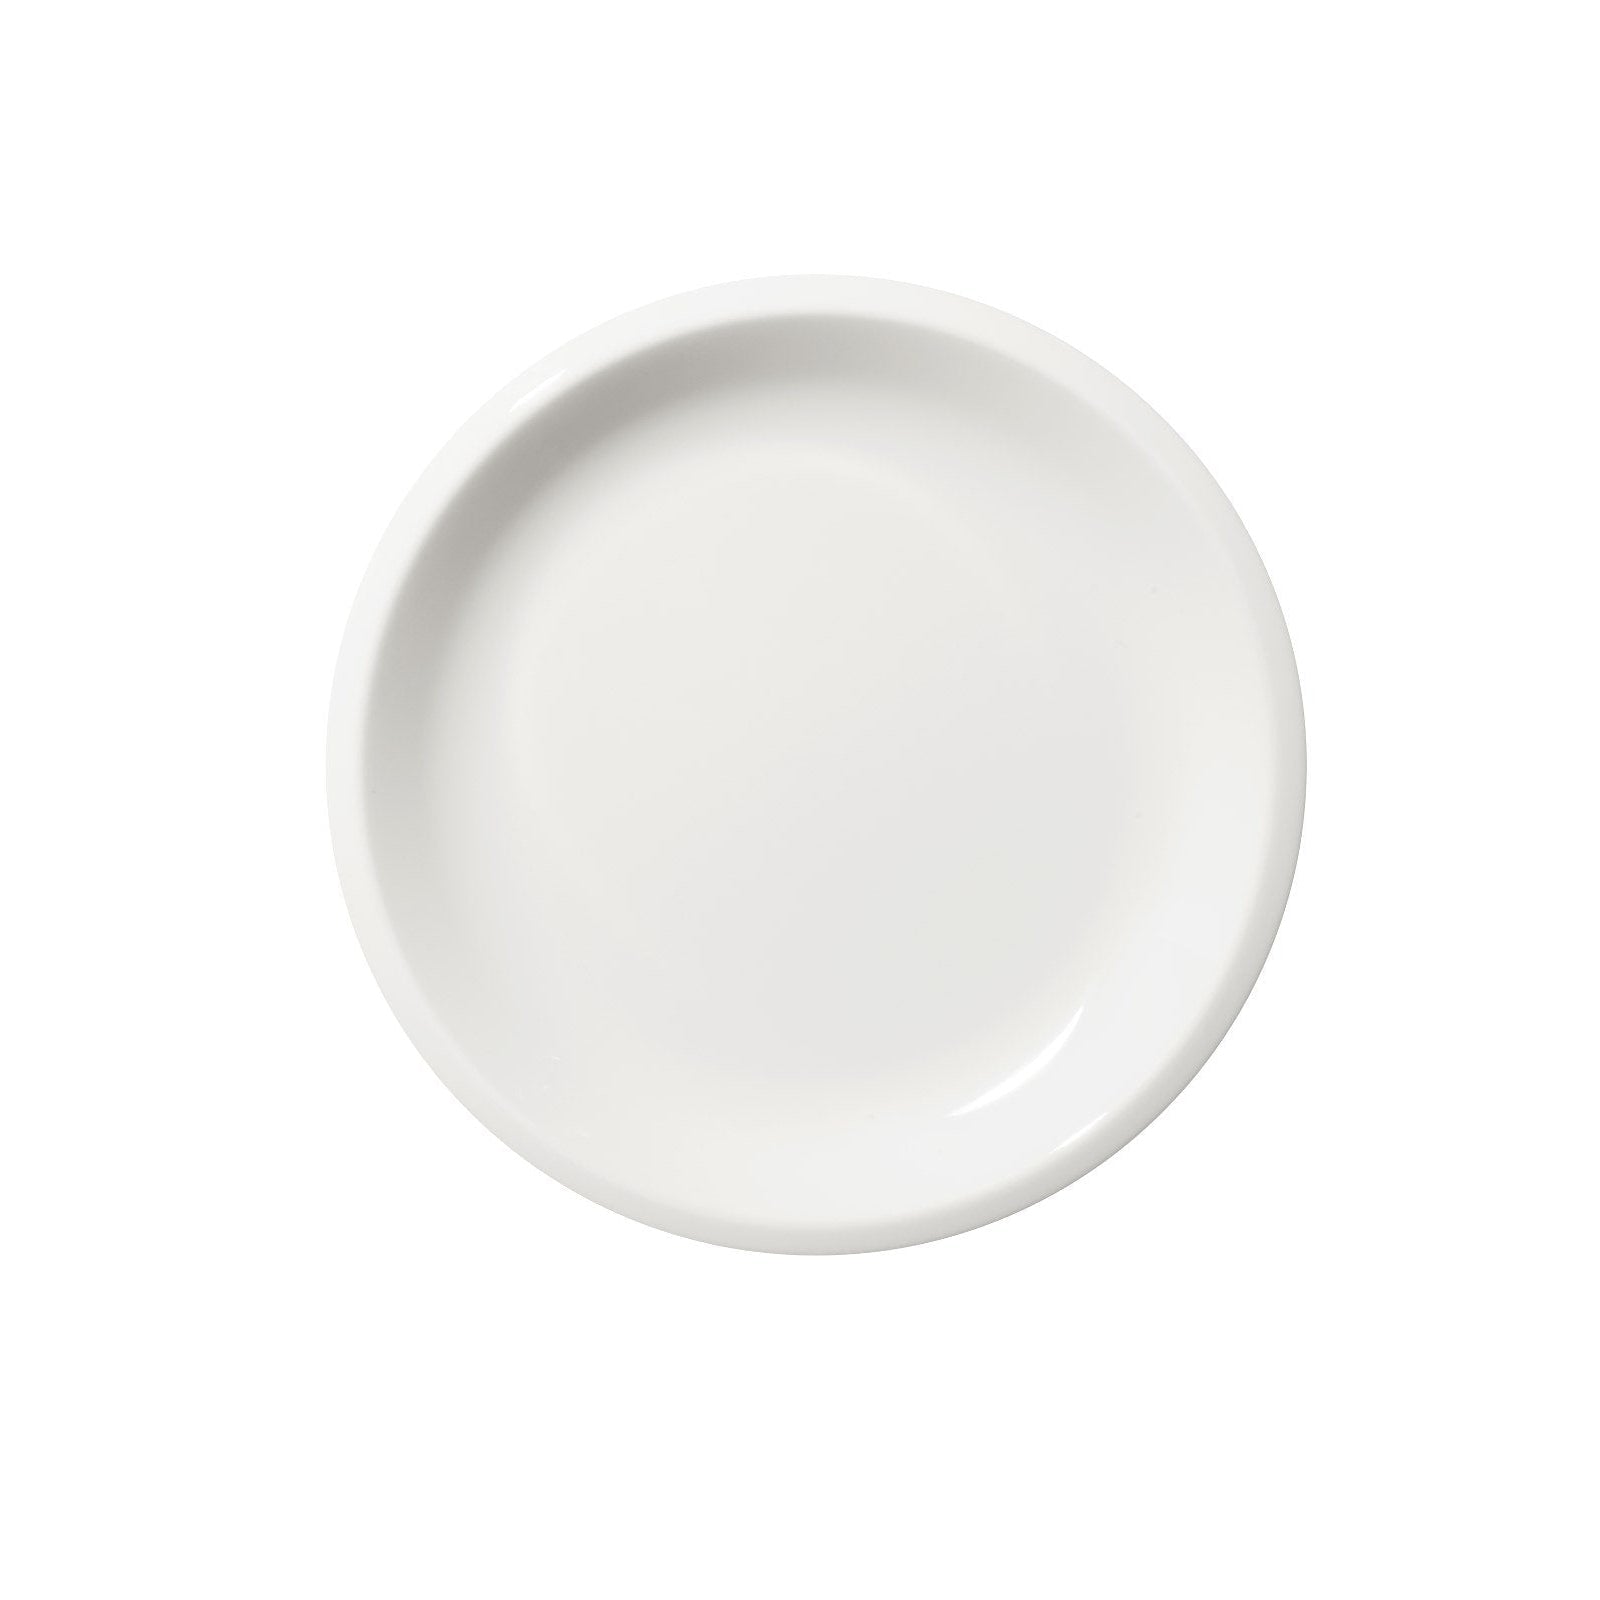 Iittala Raami Plate White, 20cm